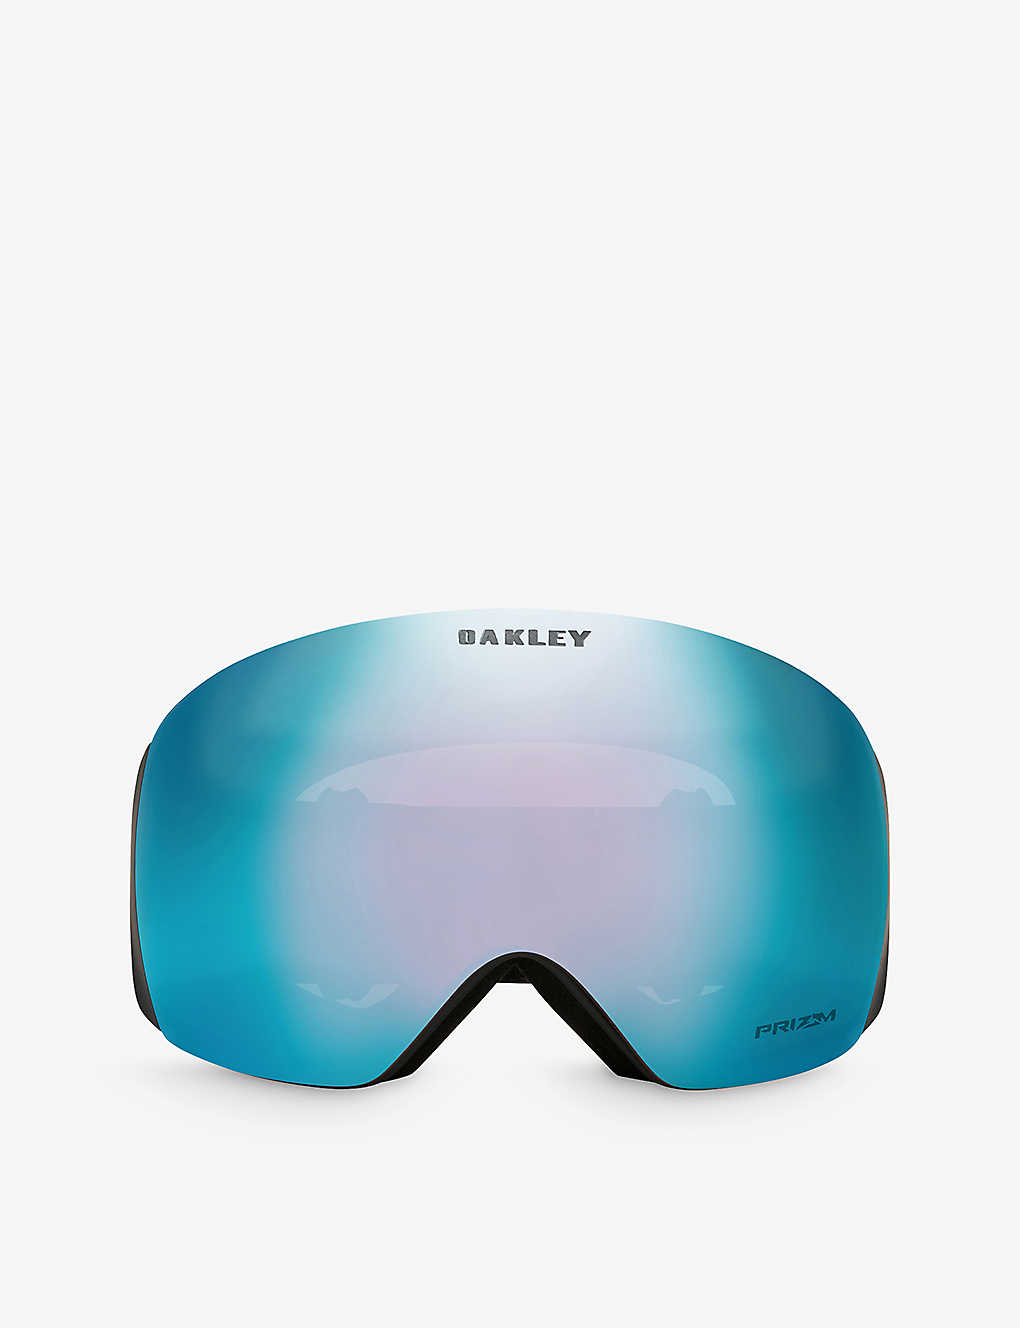 Shop Oakley Womens Blue Oo7050 Flight Deck L Ski Goggles